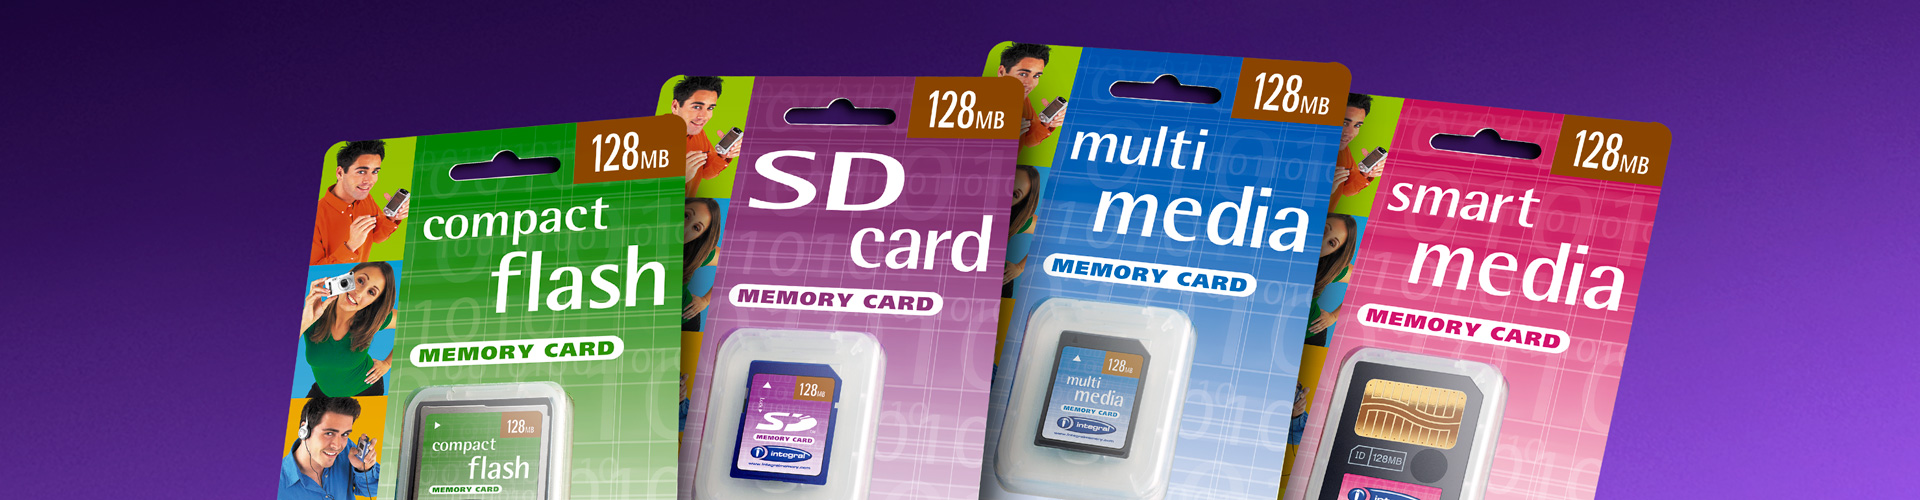 integral memory card packaging